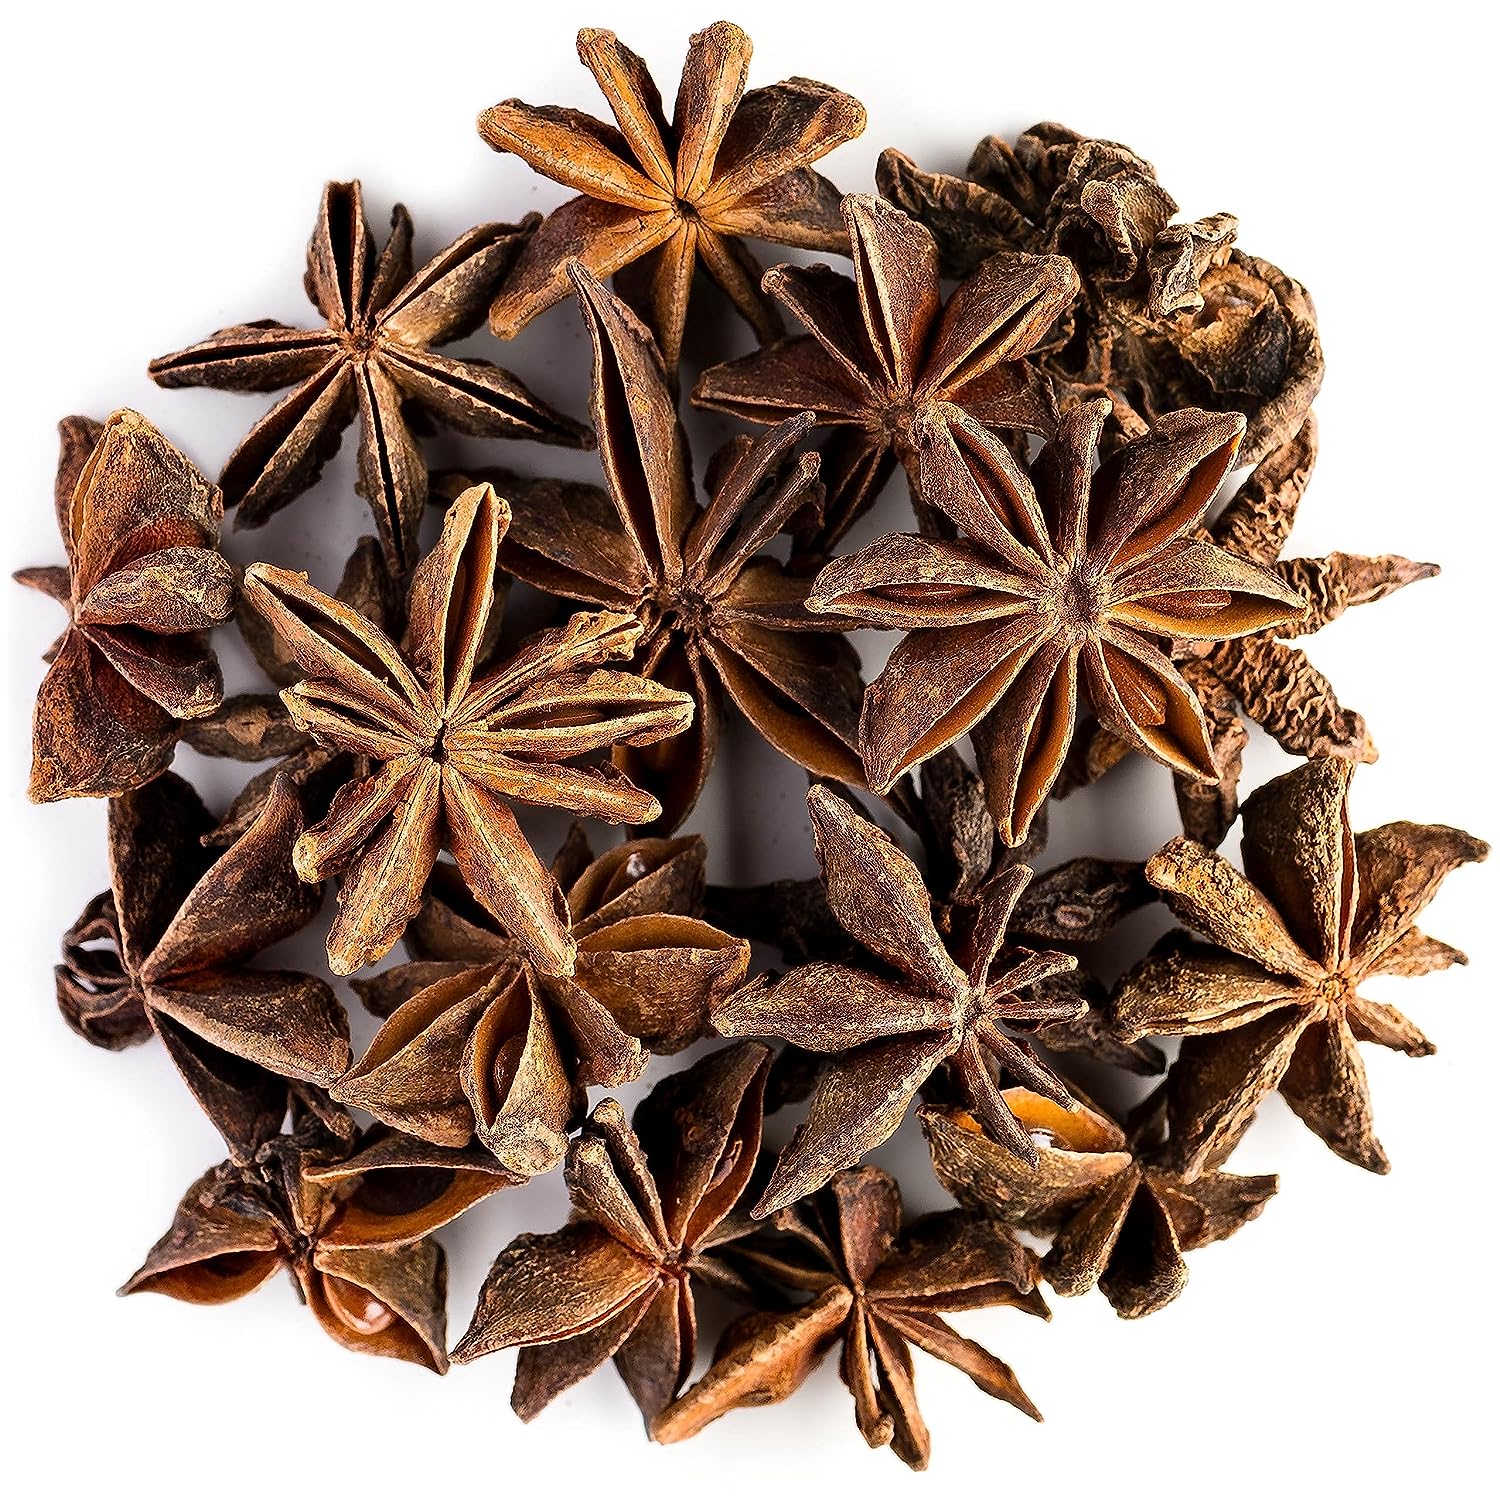 Anise Star Seed Organic Tea - Staranise or Staranis Illicium Verum - Star Anis Tea Star Anise Tea Star Anice Staranise Tea Anise Anis Star Anise Seed Tea Star Tea Star Annise Star Seed